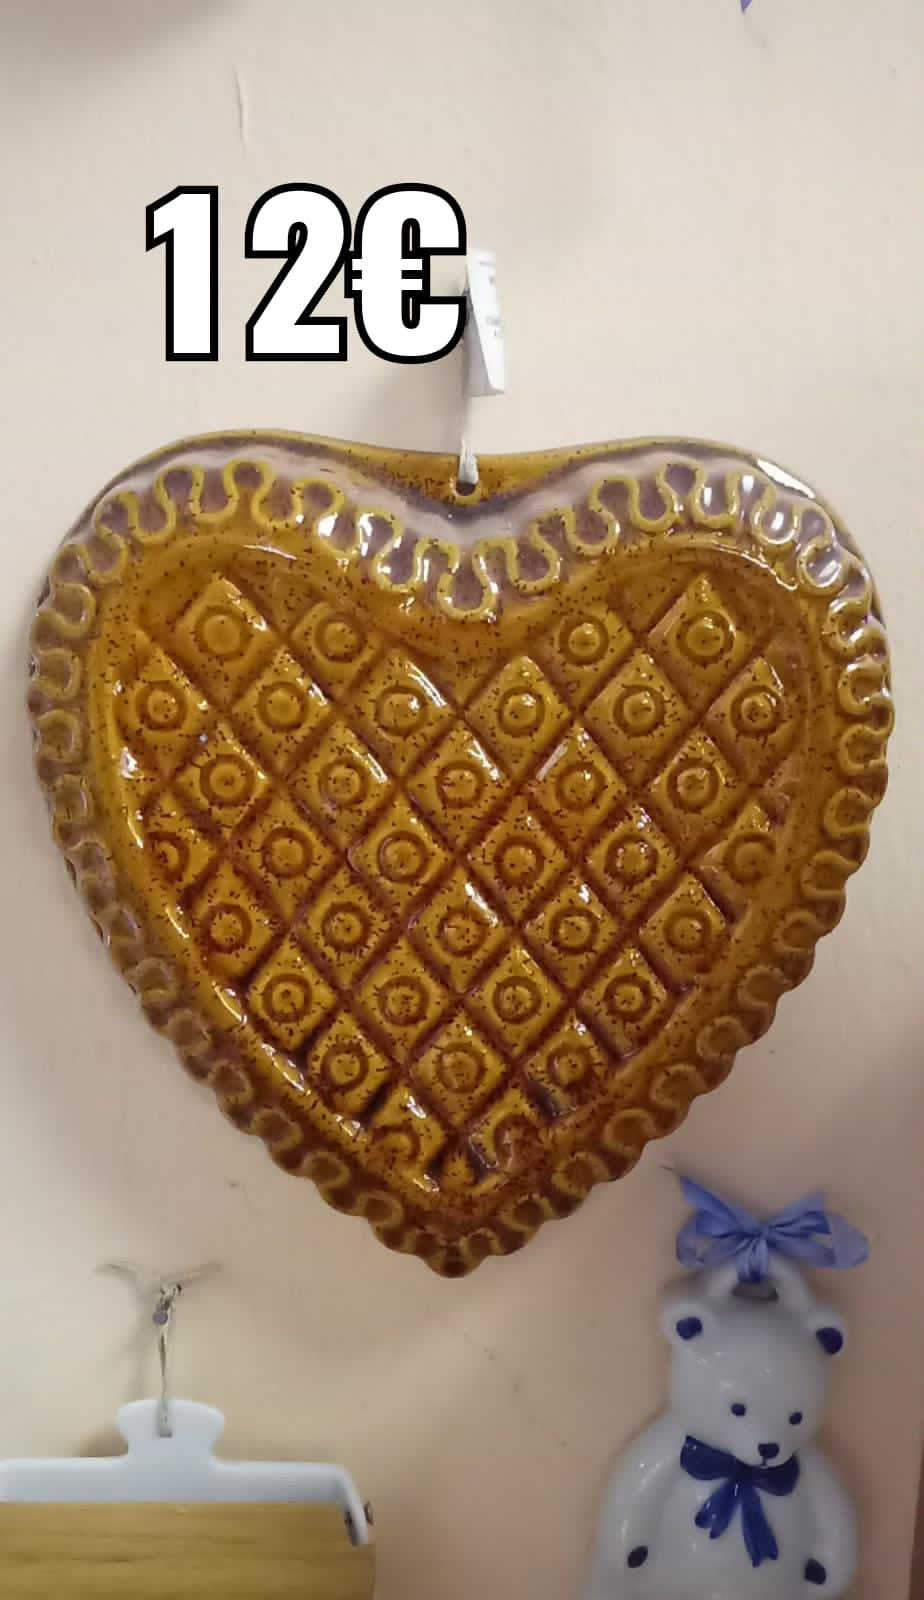 Heart-shaped ceramic baking dish